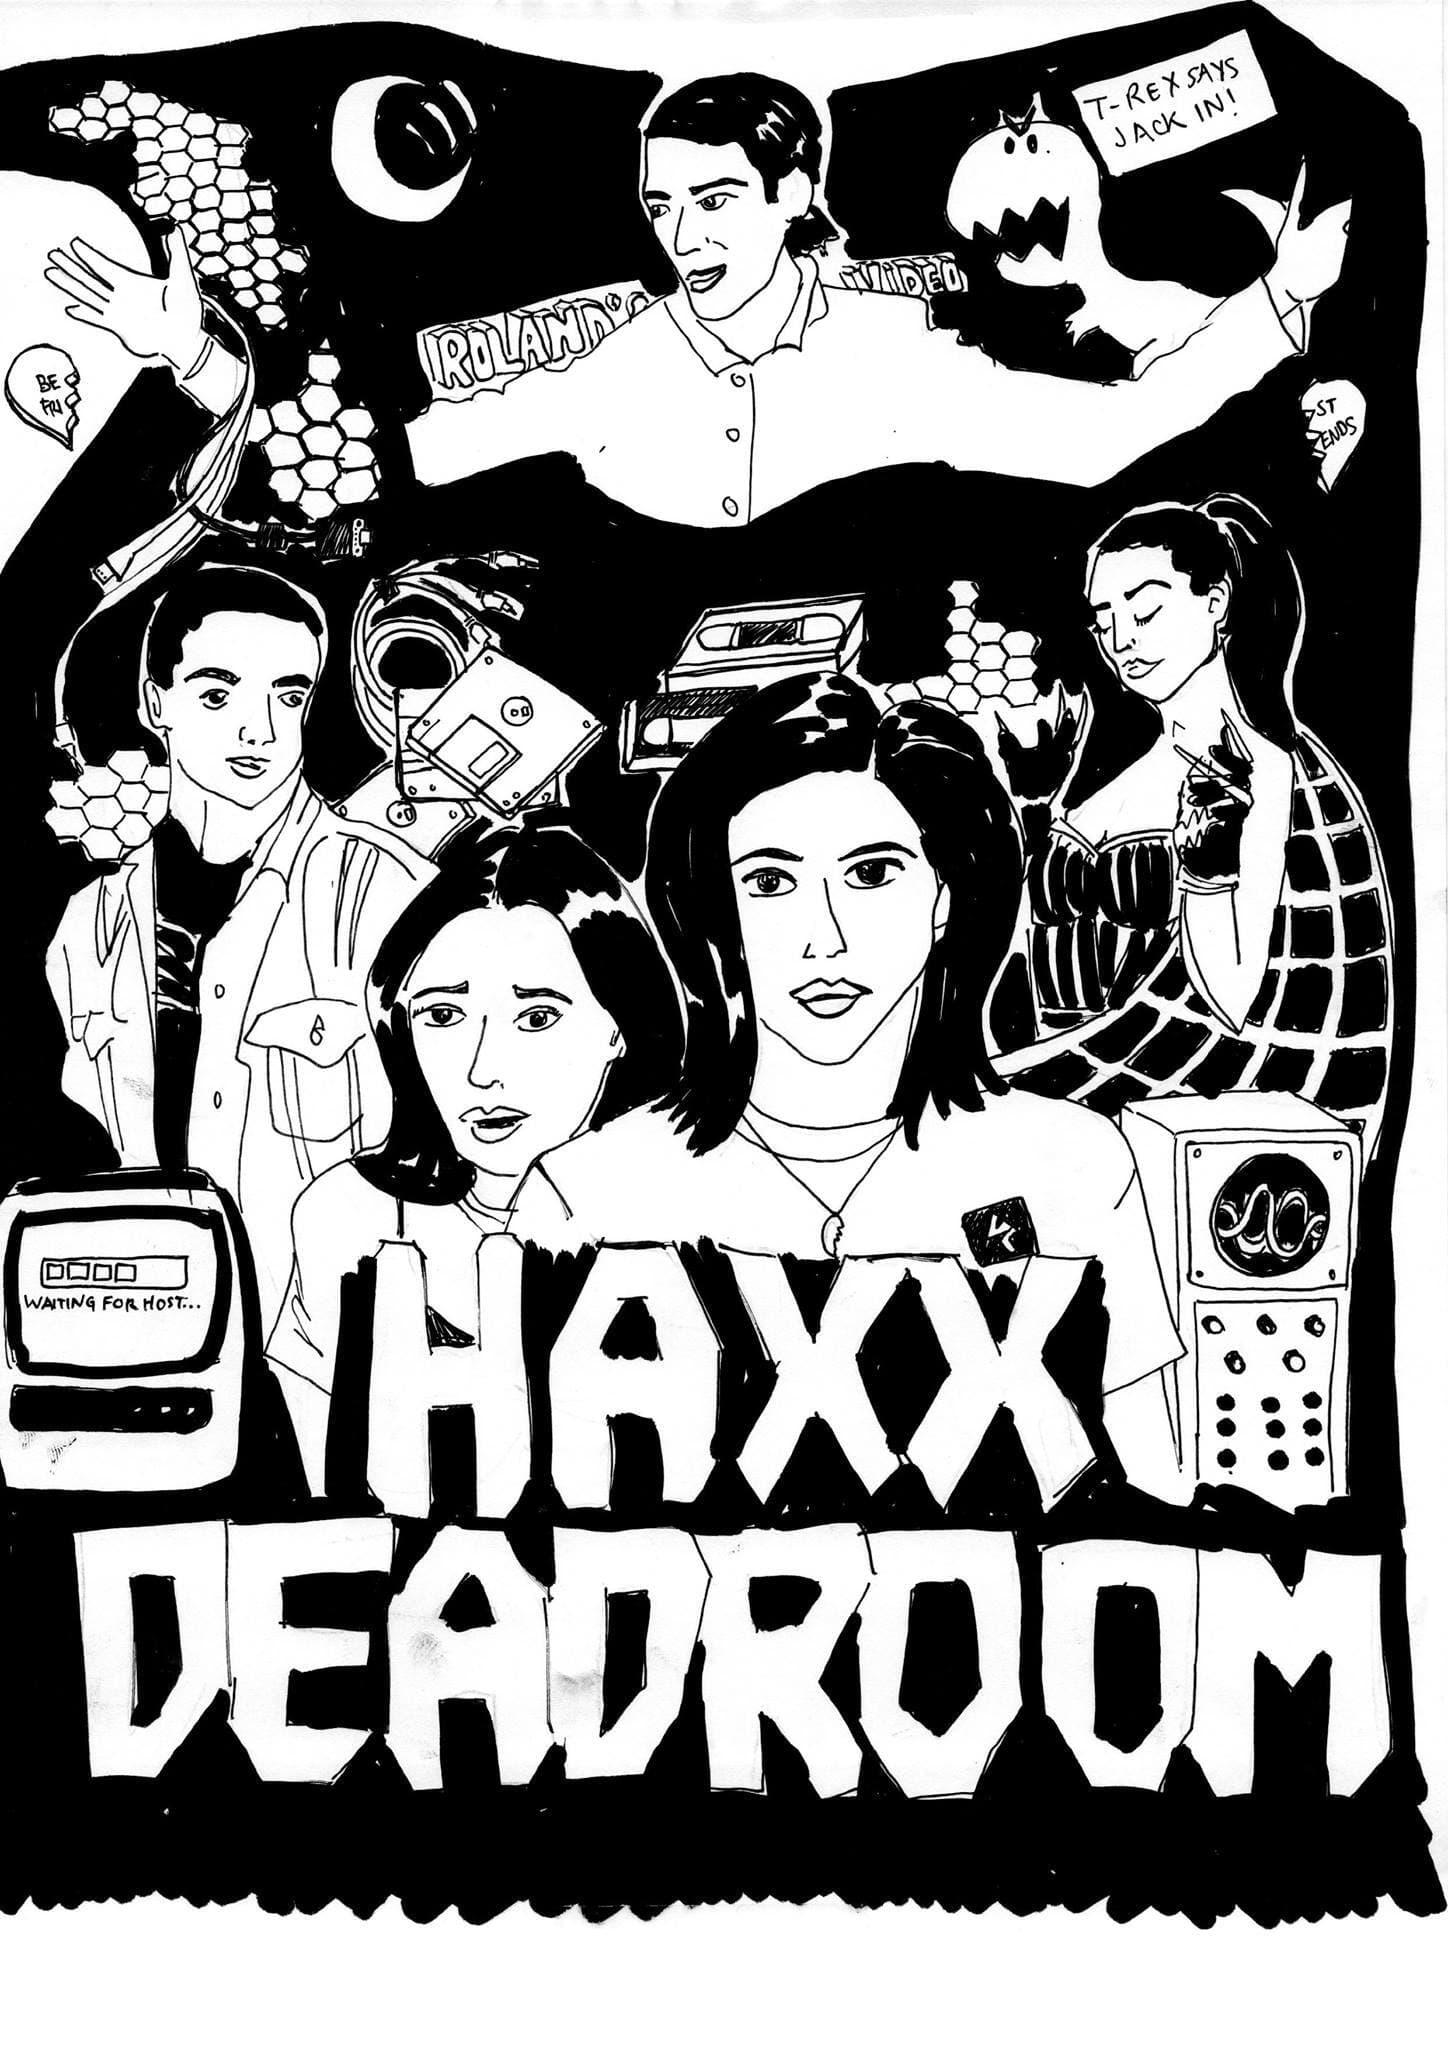 Haxx Deadroom poster